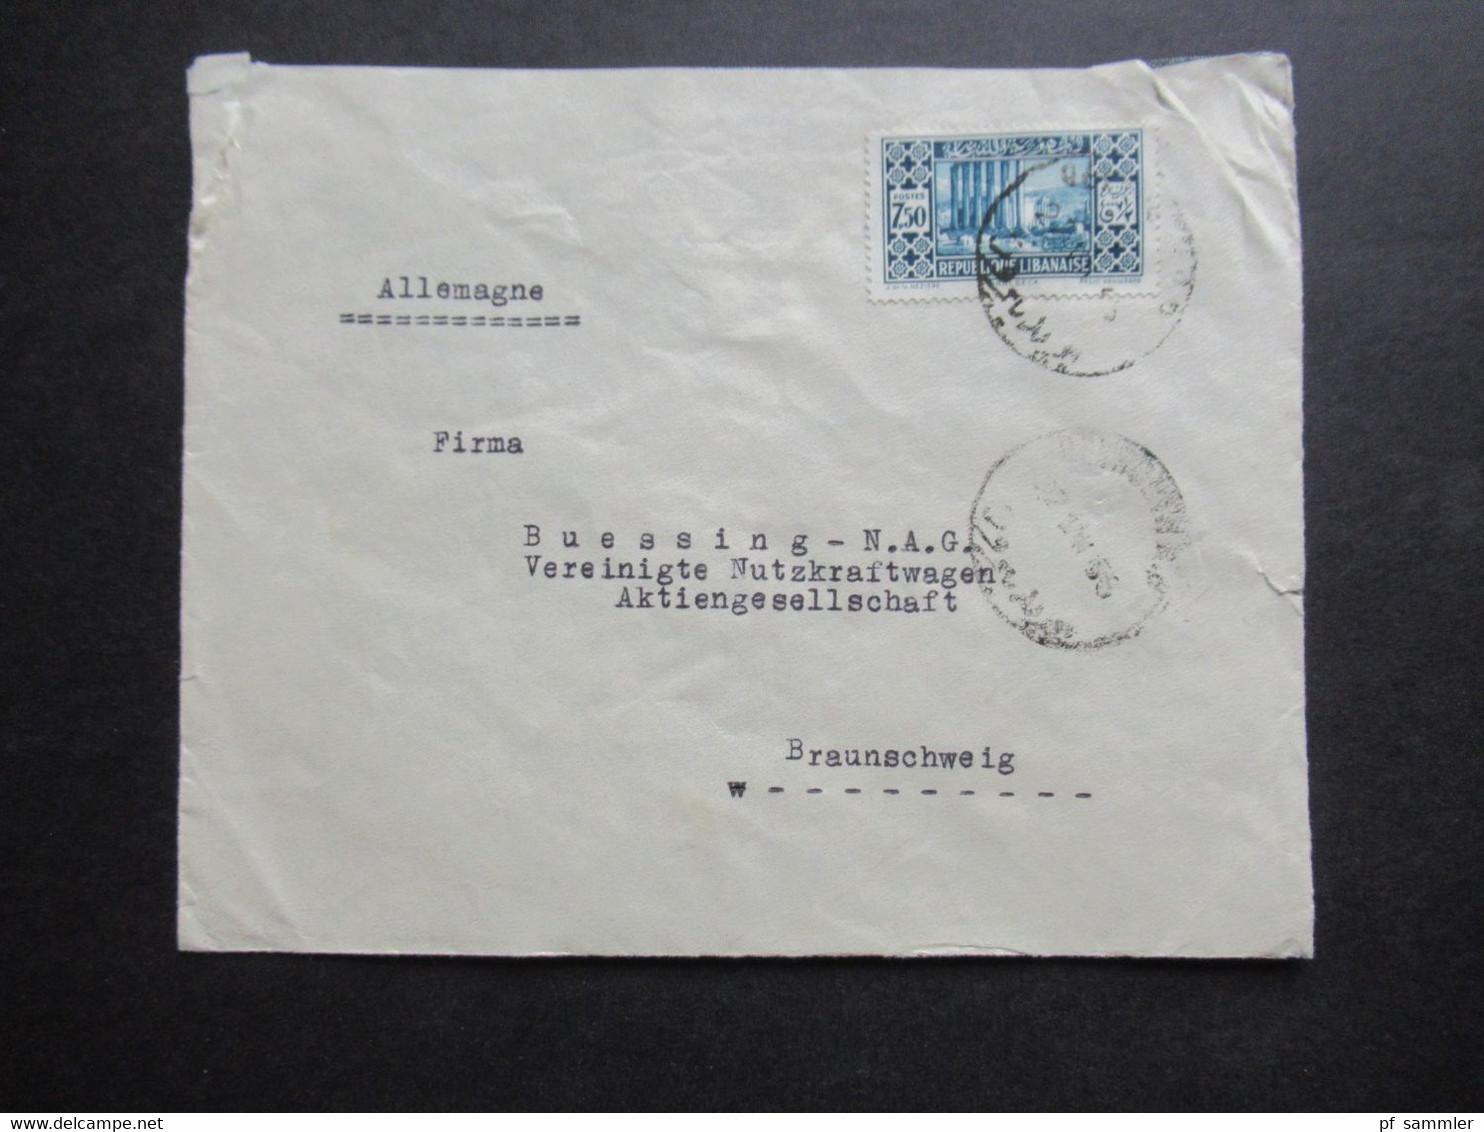 Republique Libanaise 1935 Libanon Umschlag Fankhaenel & Kronofol Beyrouth (Syrie) Aufkleber Soennecken Weltmarke - Lebanon